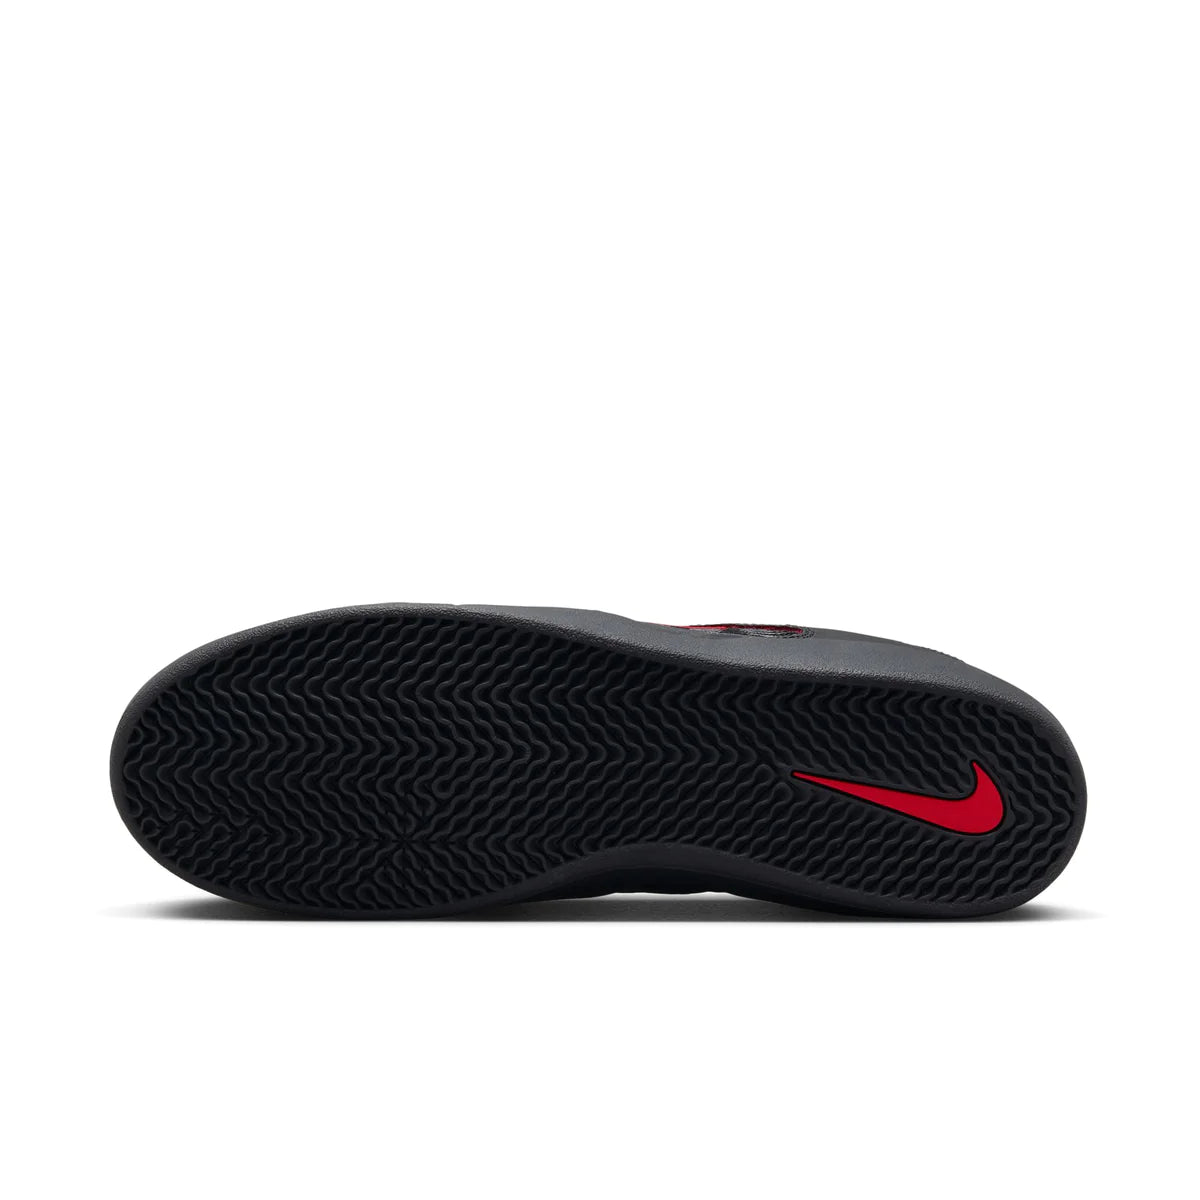 Nike SB Ishod Premium in Black/University Red - Goodnews Skateshop